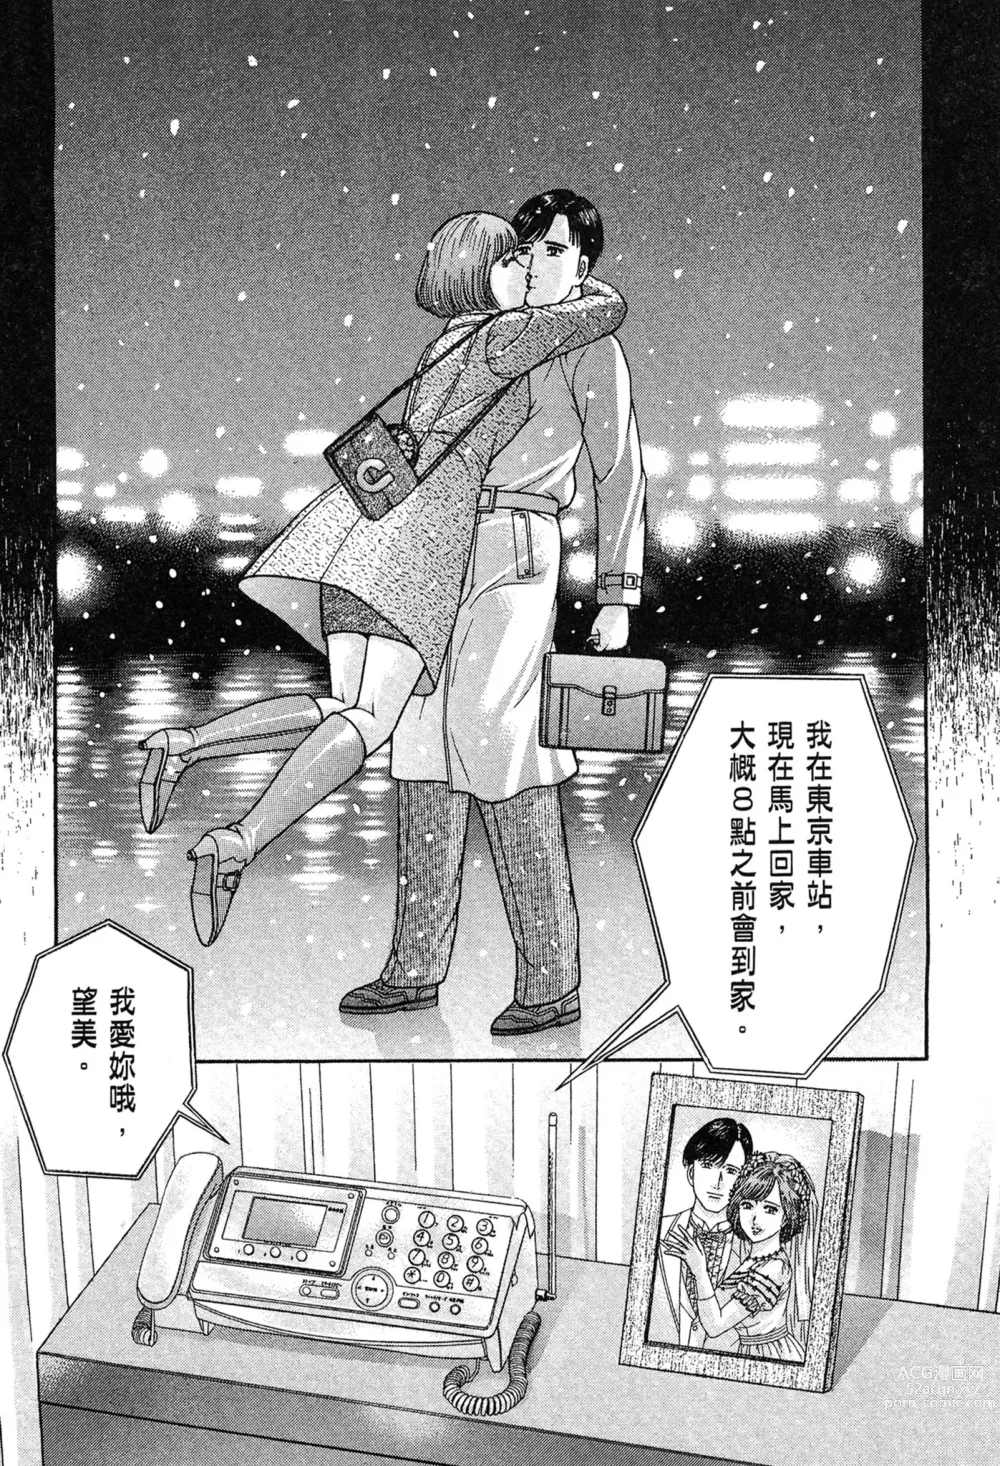 Page 201 of manga 現代美人妻圖鑑